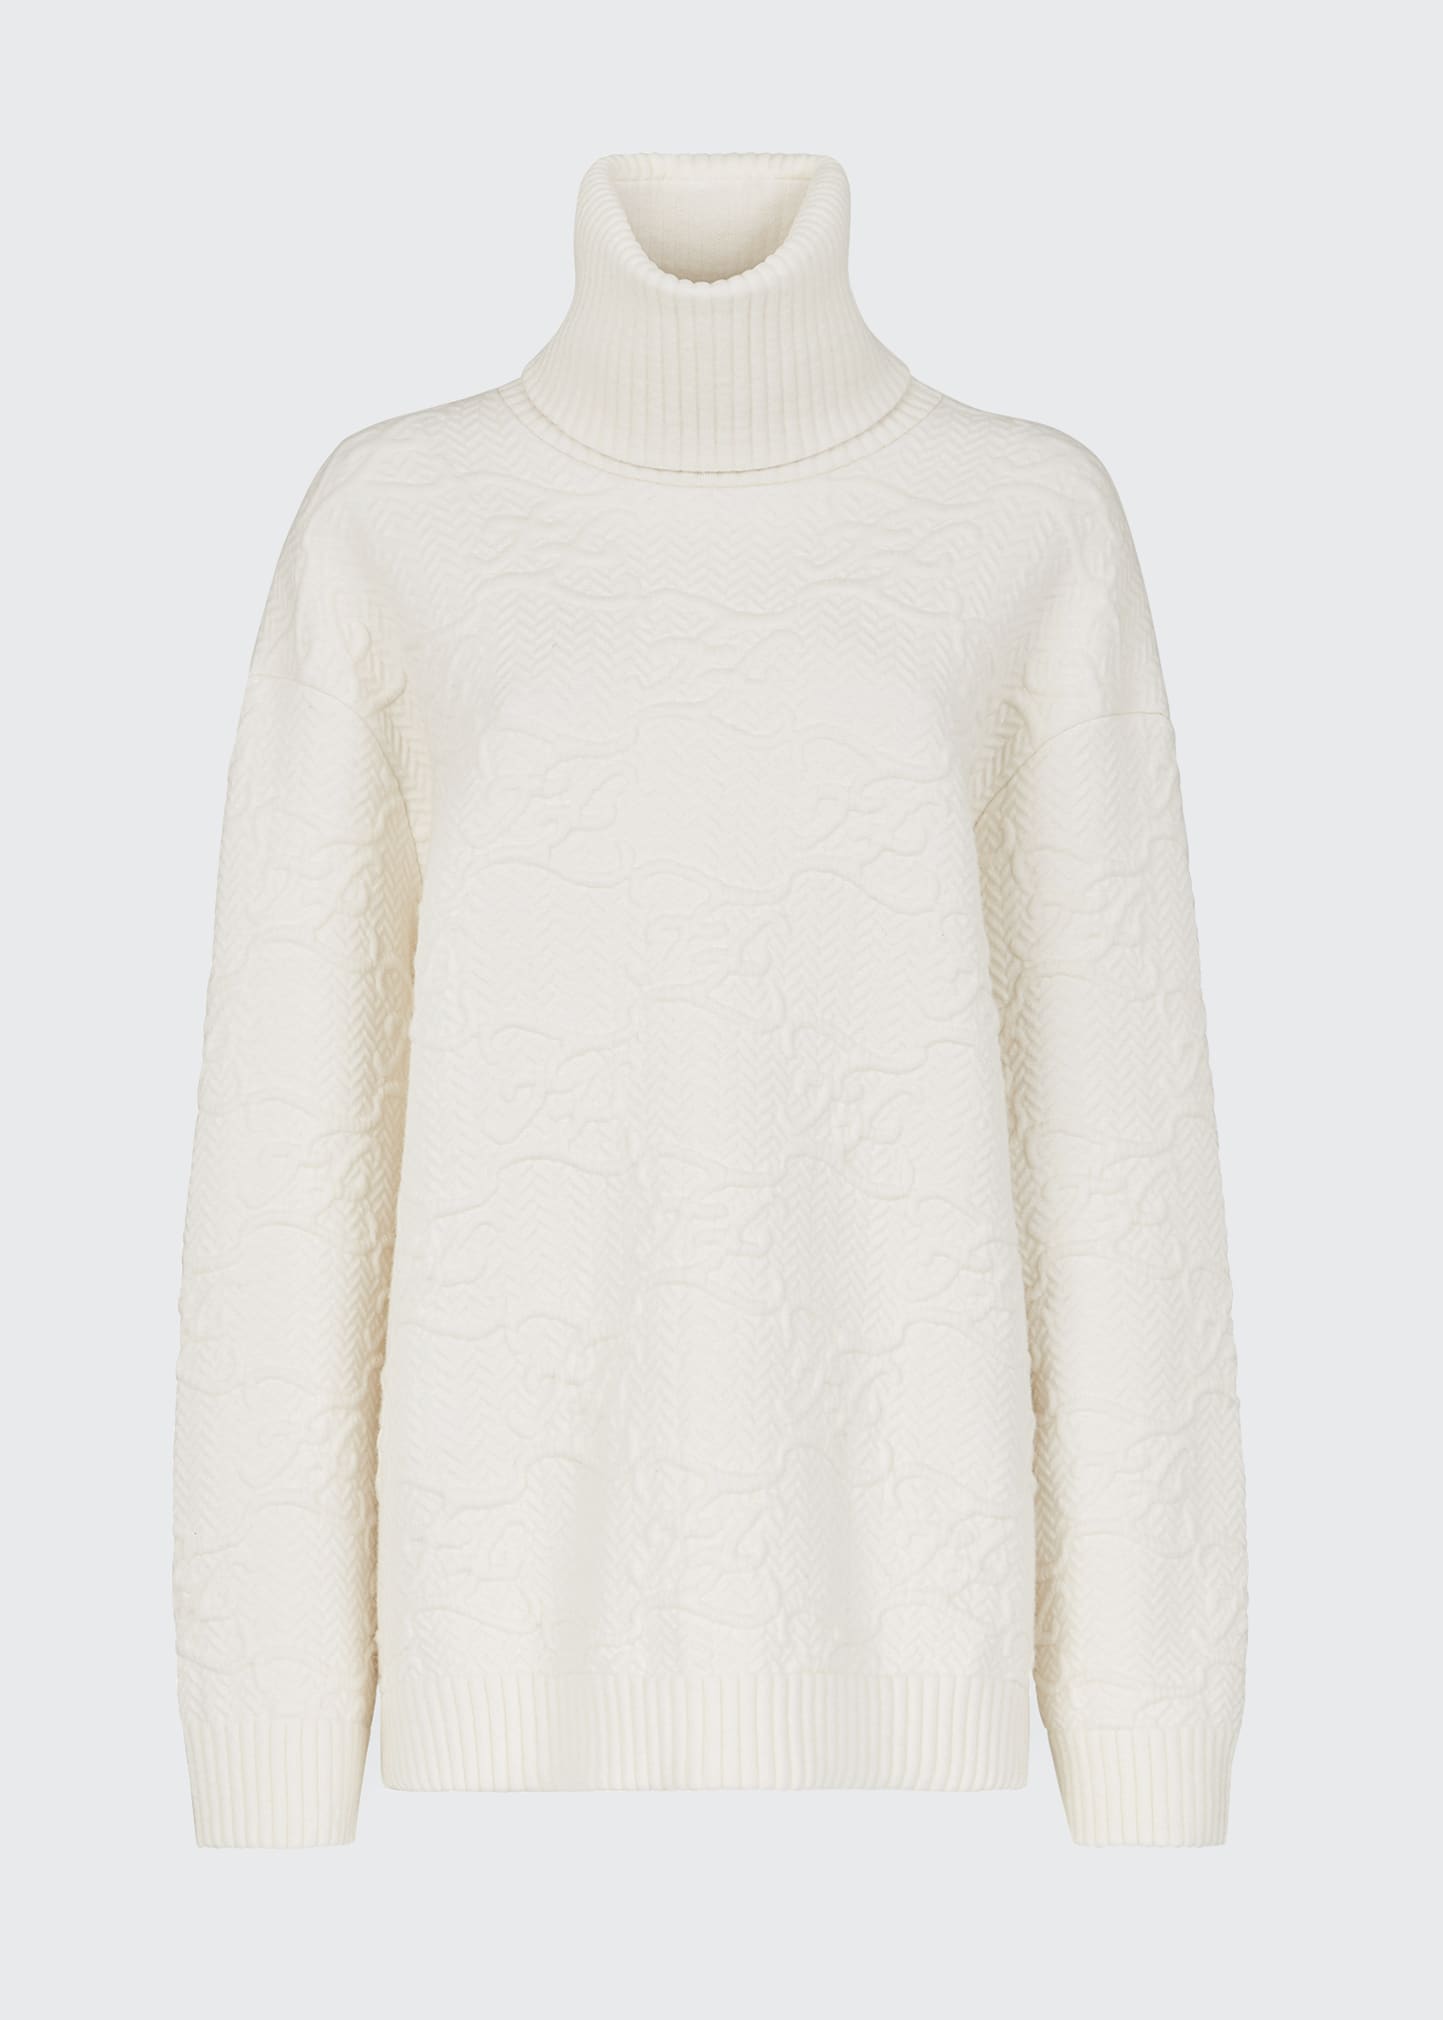 Fendi Karligraphy Embossed Turtleneck Sweater